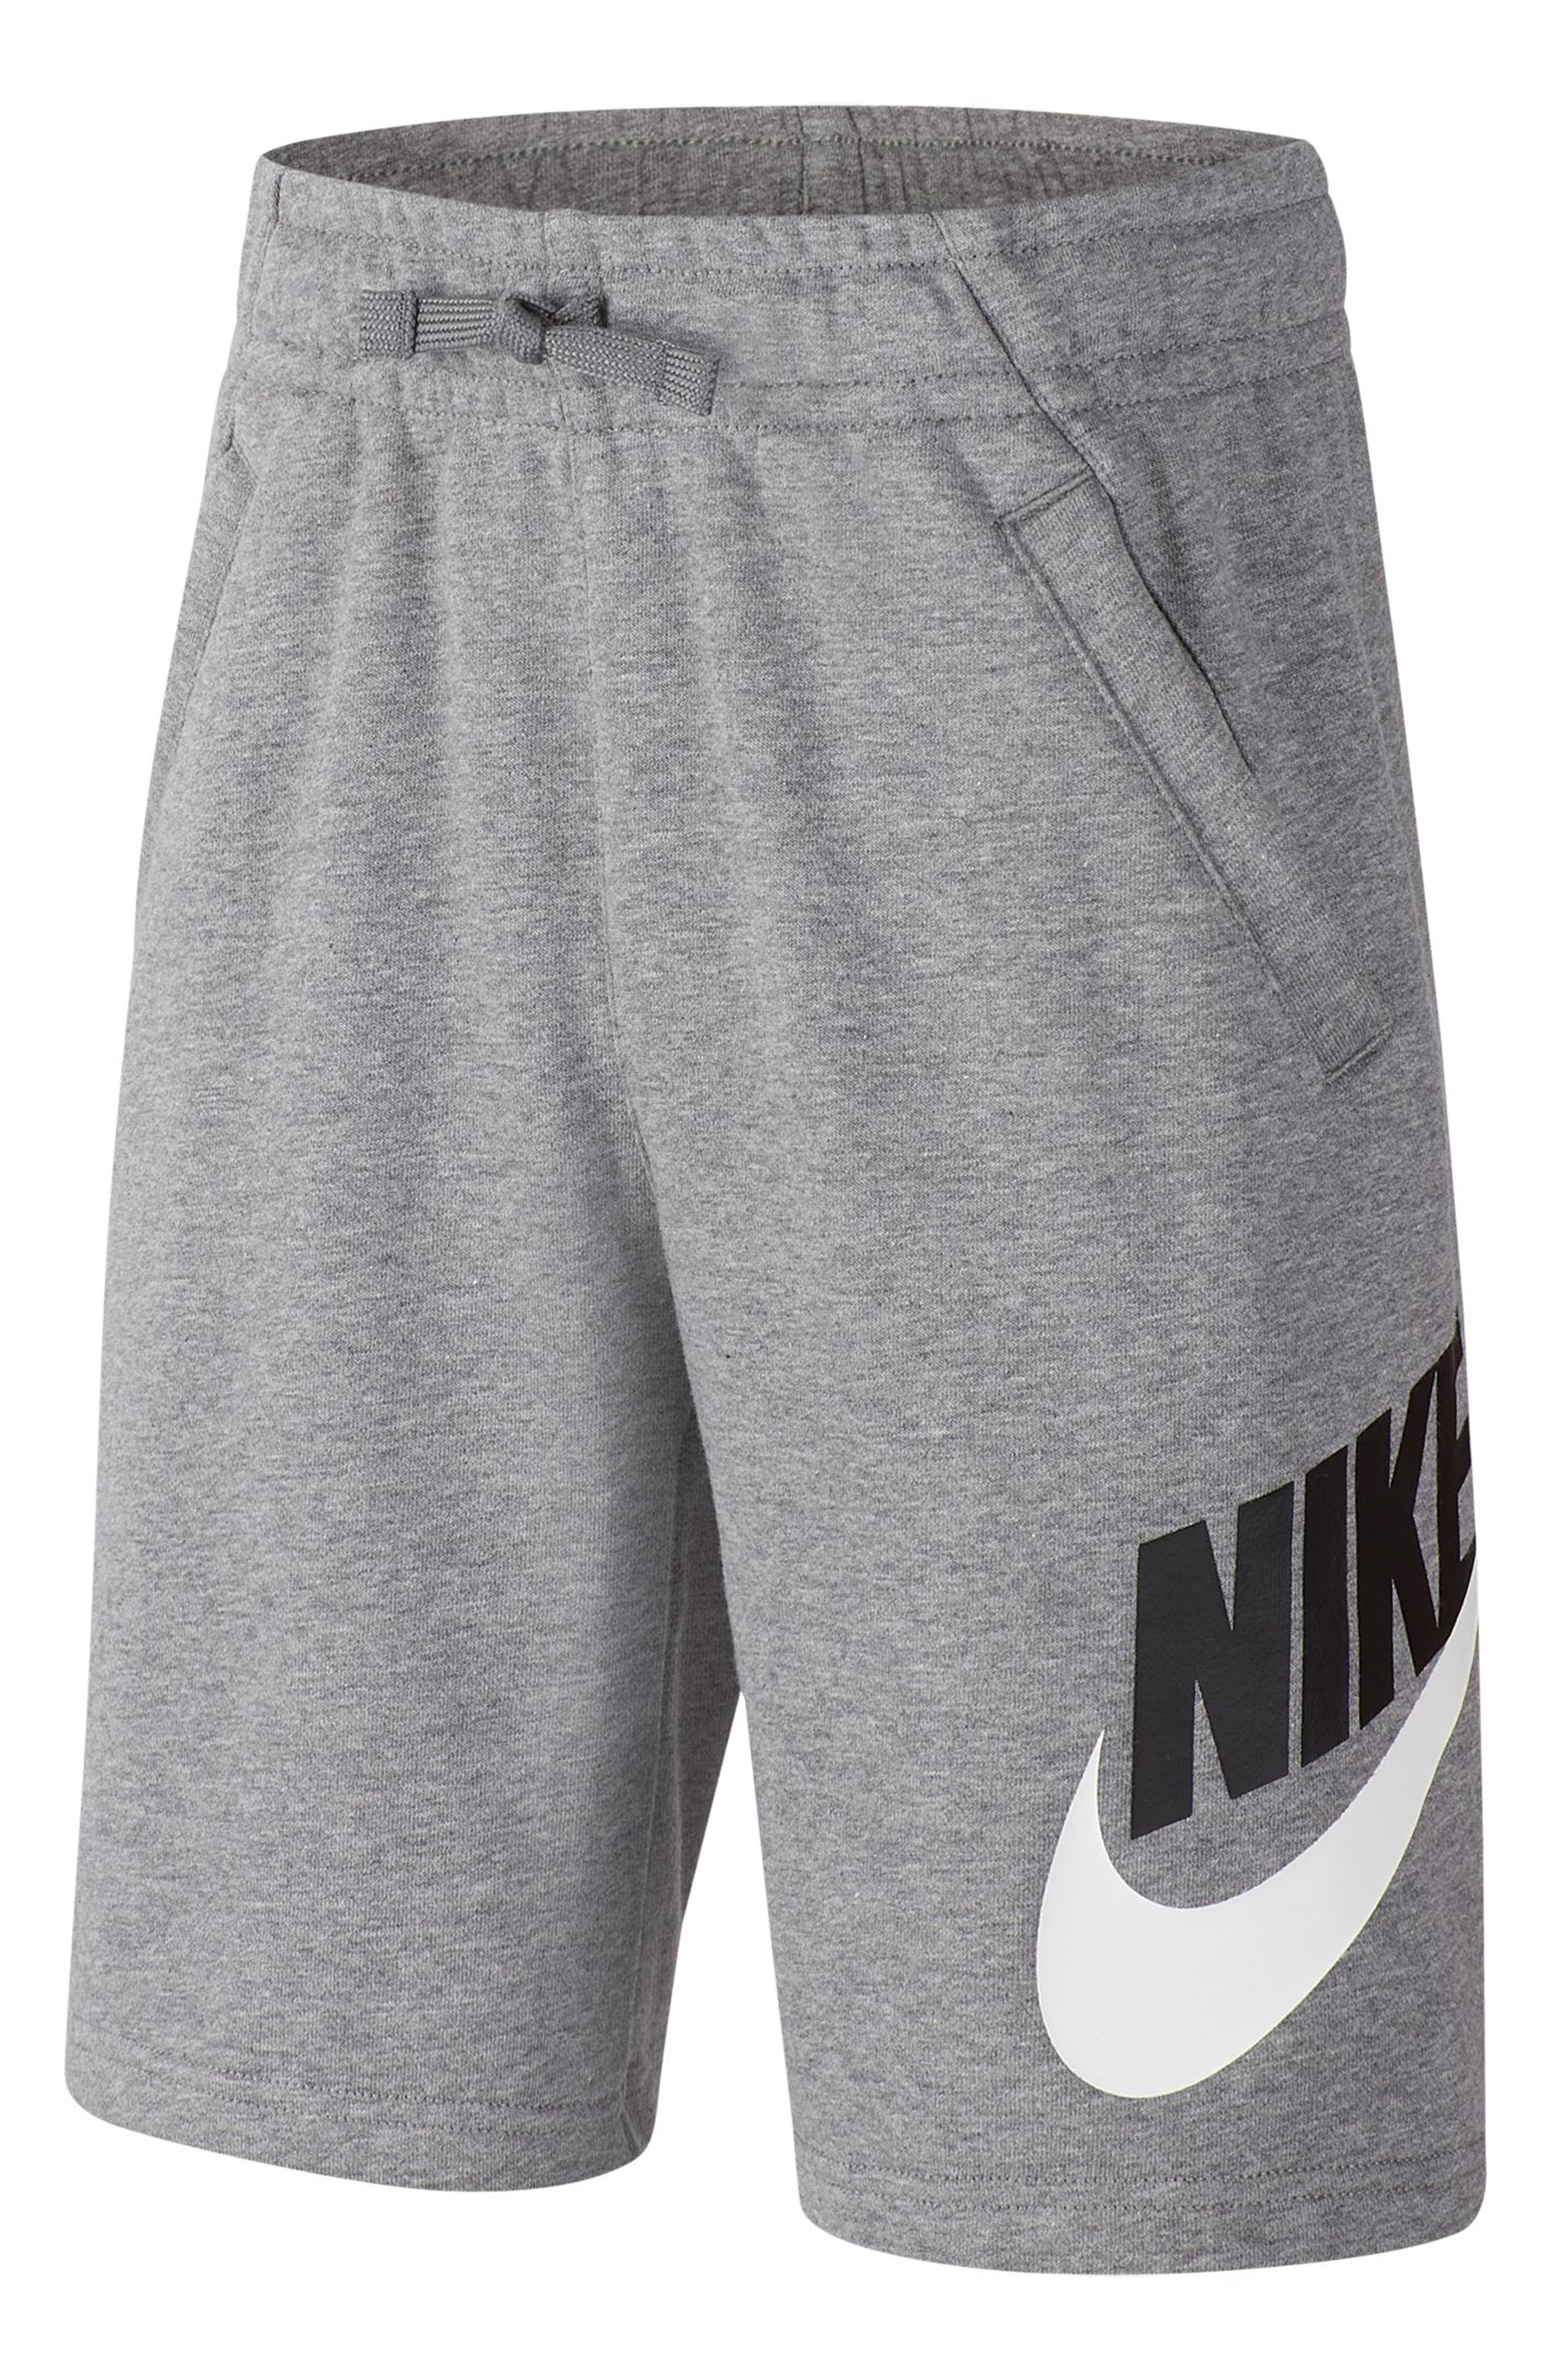 boys grey nike shorts